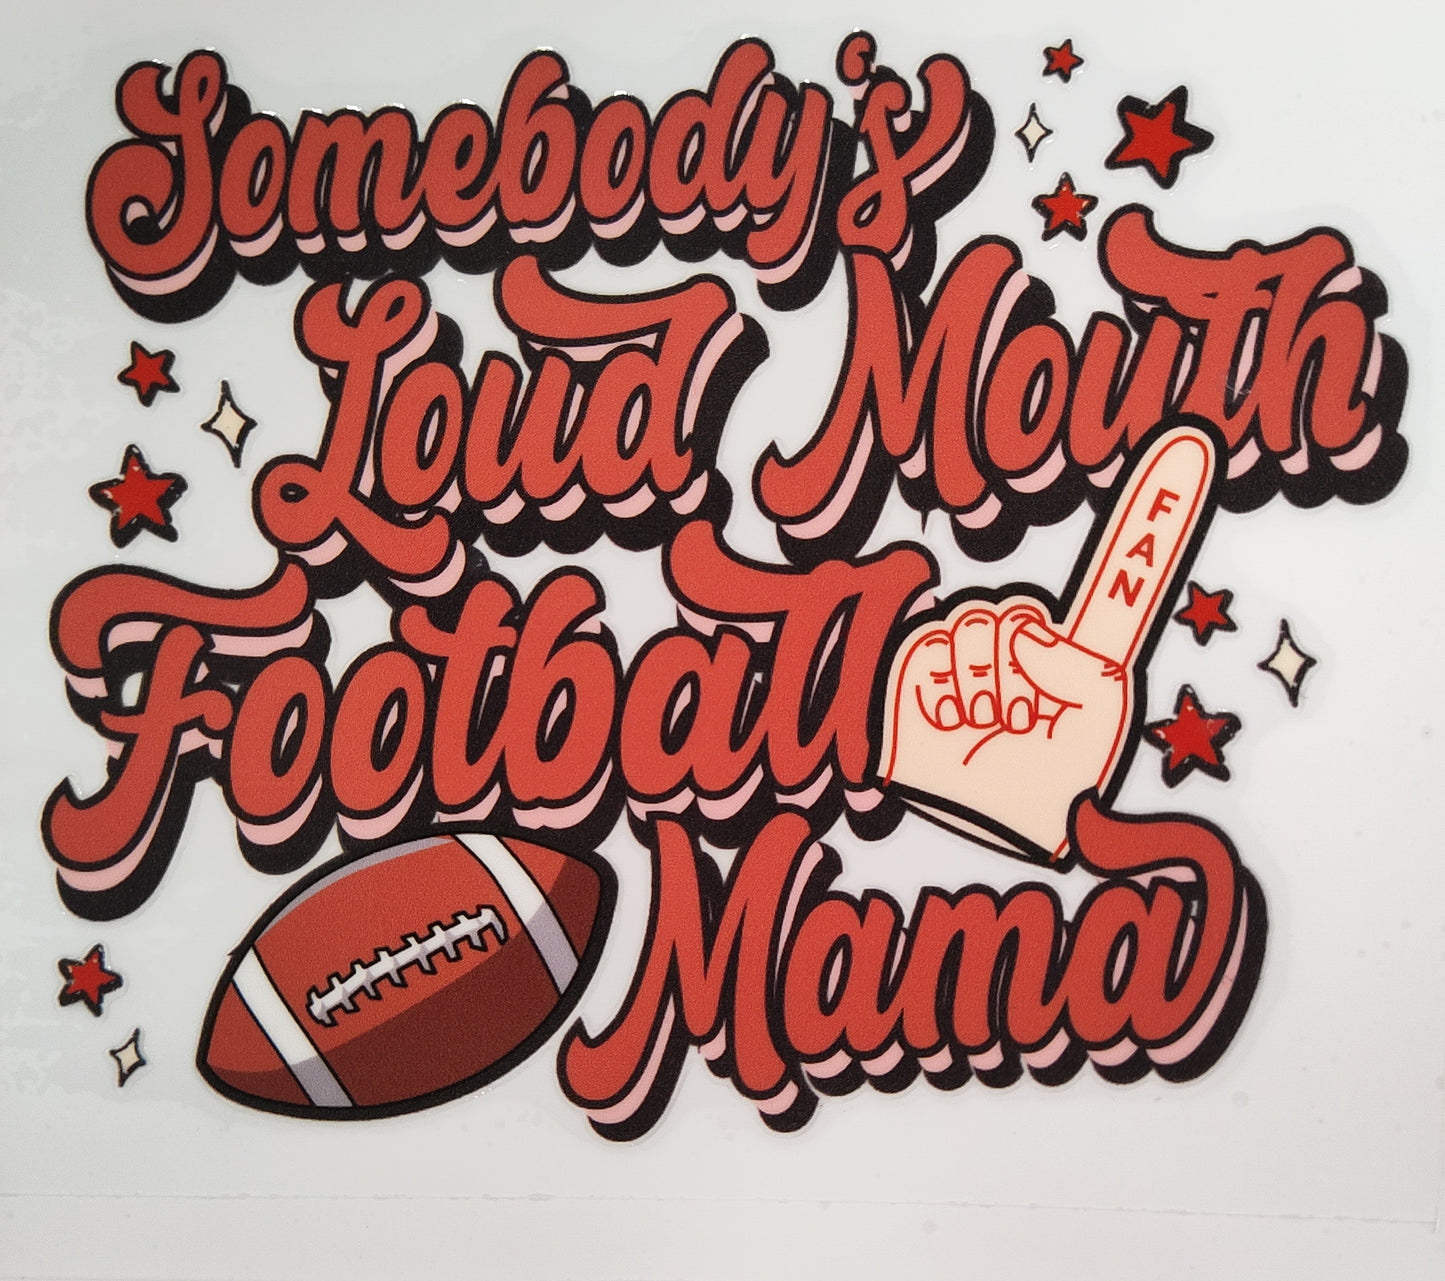 "Somebody's loud mouth football Mama" UV Transfers